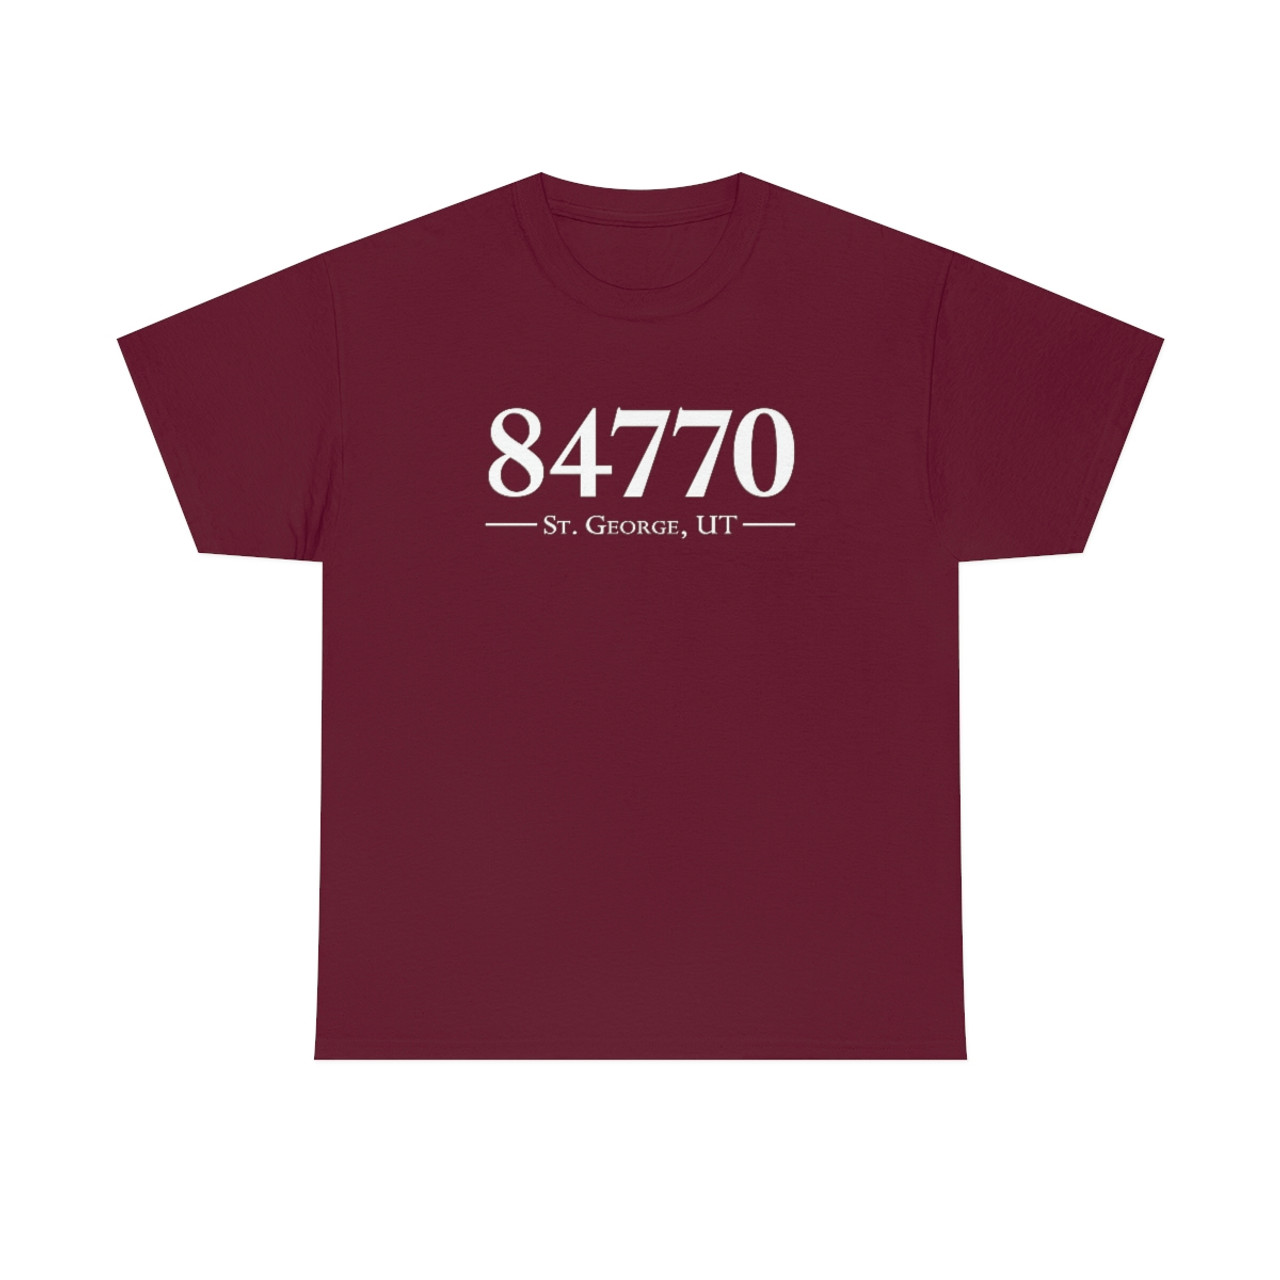 Zip Code T-Shirt St. George, UT 84770 - UTAH primi